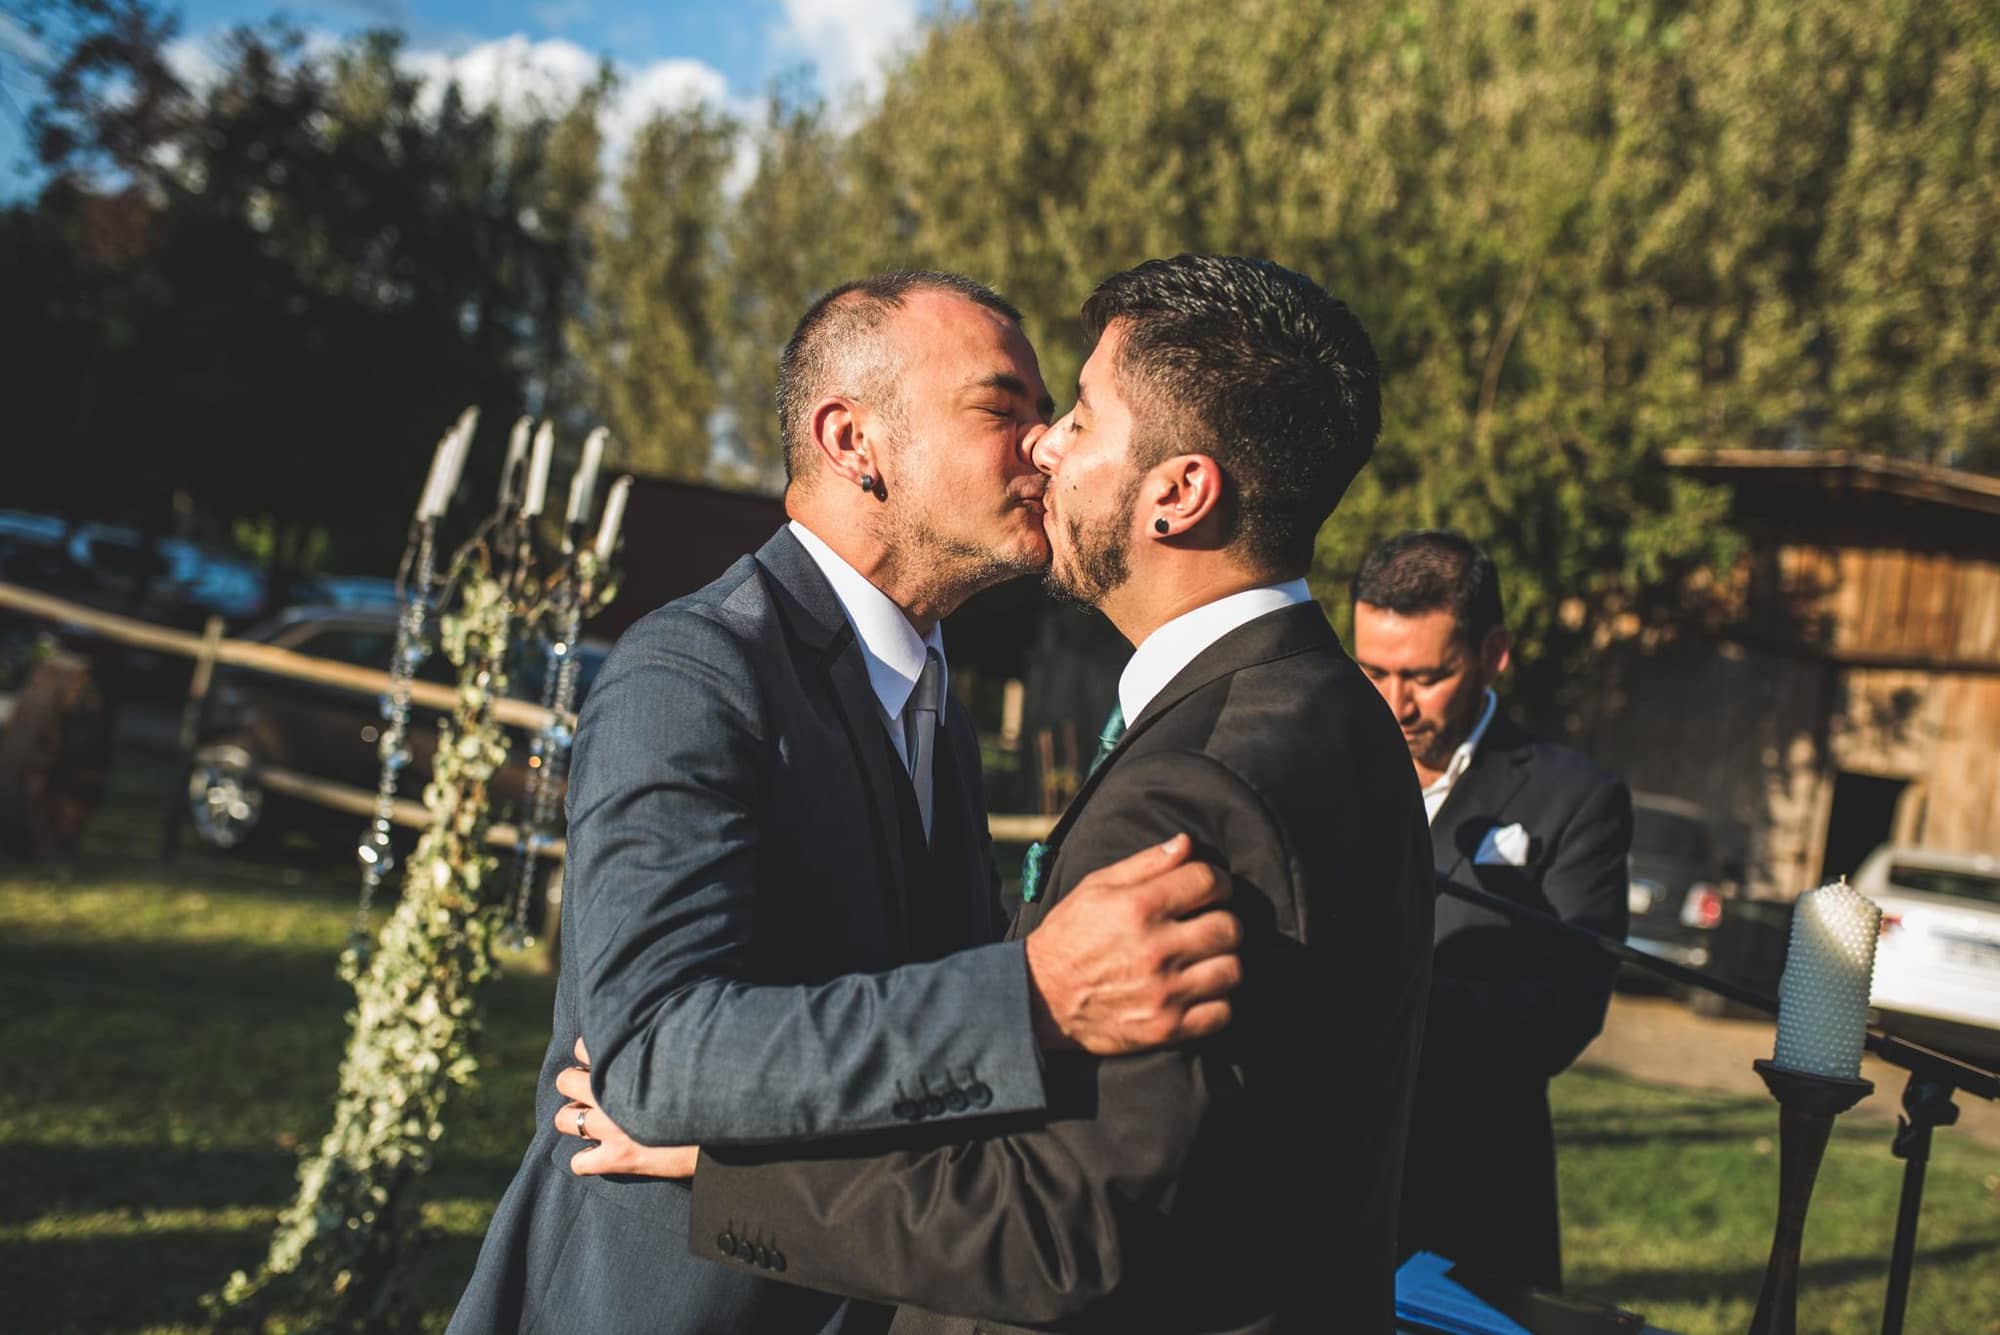 union civil-matrimonio igualitario-matrimonio gay-entre alamos y cachapoal